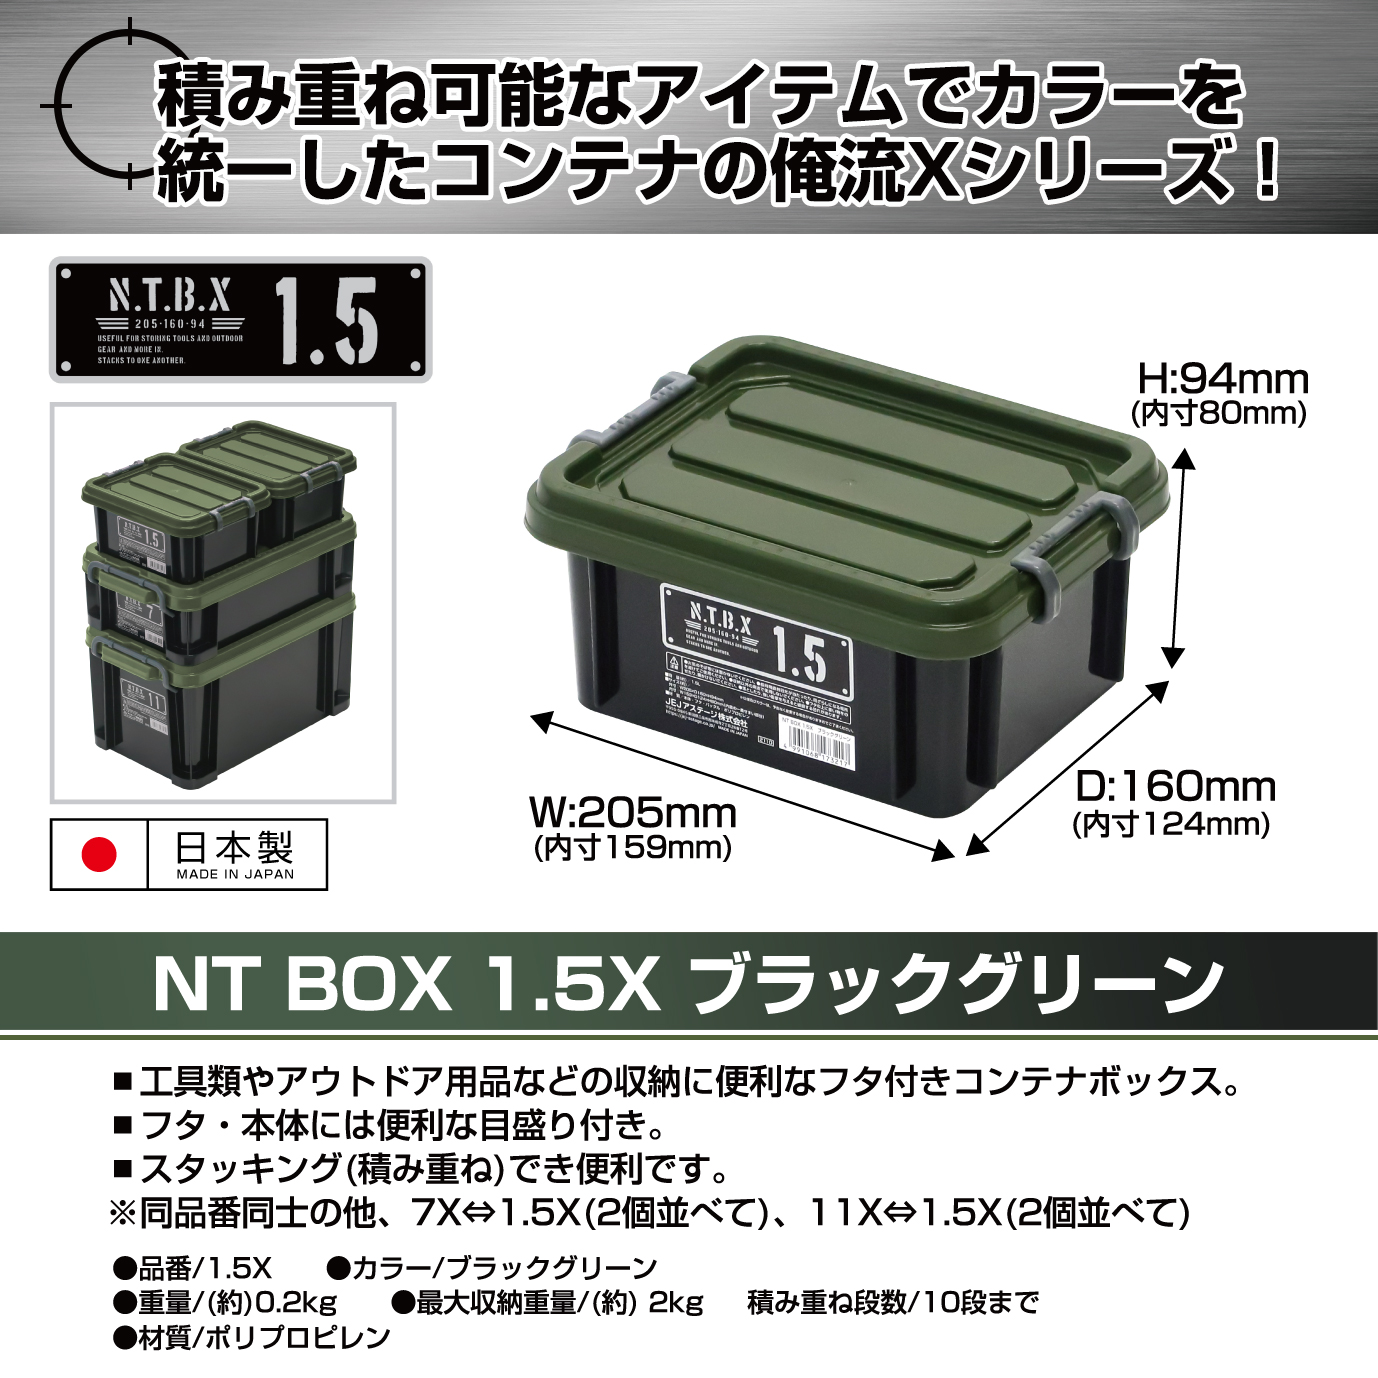 JEJアステージ 収納ボックス 日本製 積み重ね [Xシリーズ NTボックス #